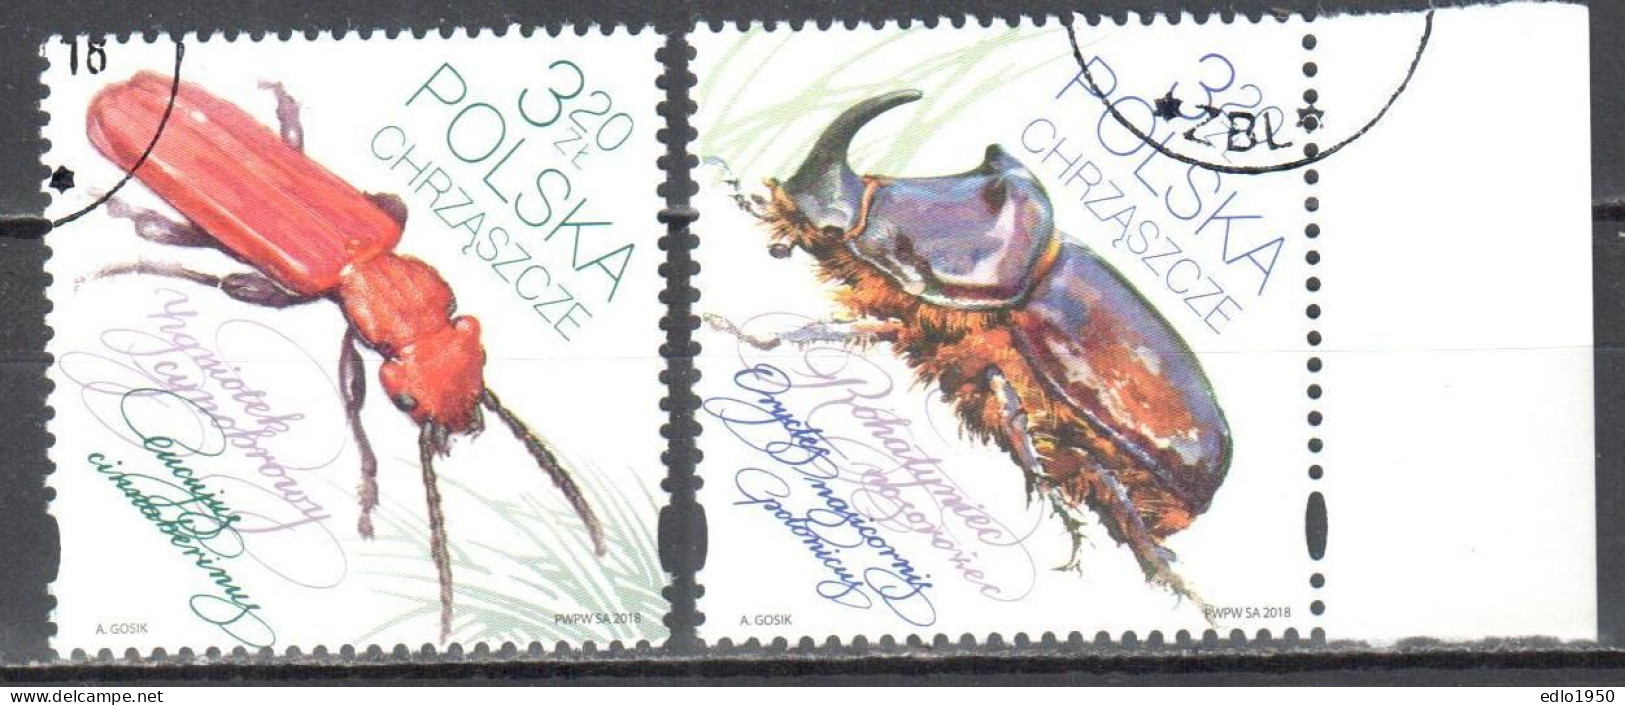 Poland 2018 - Beetles - Mi.5019-20 - Used - Usados